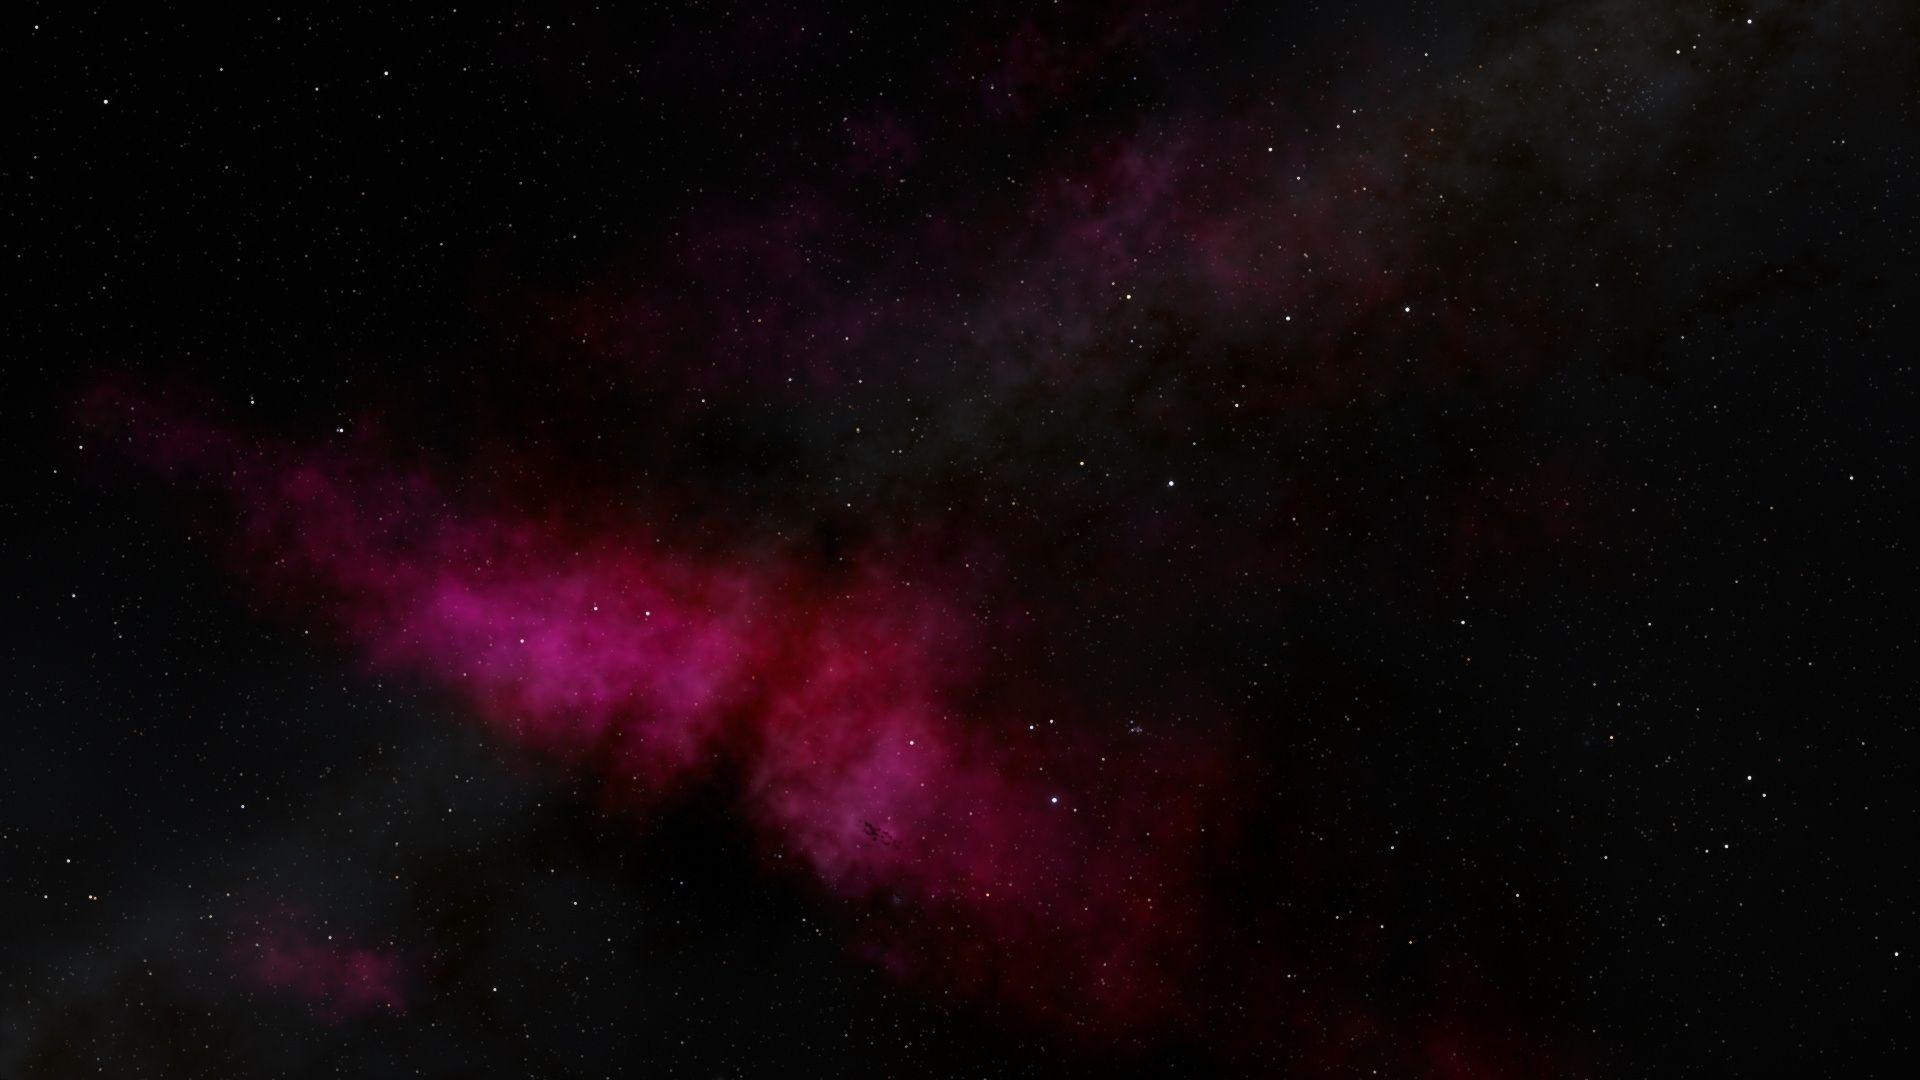 Space Dark Dust Galaxy Nebula, HD Digital Universe, 4k Wallpaper